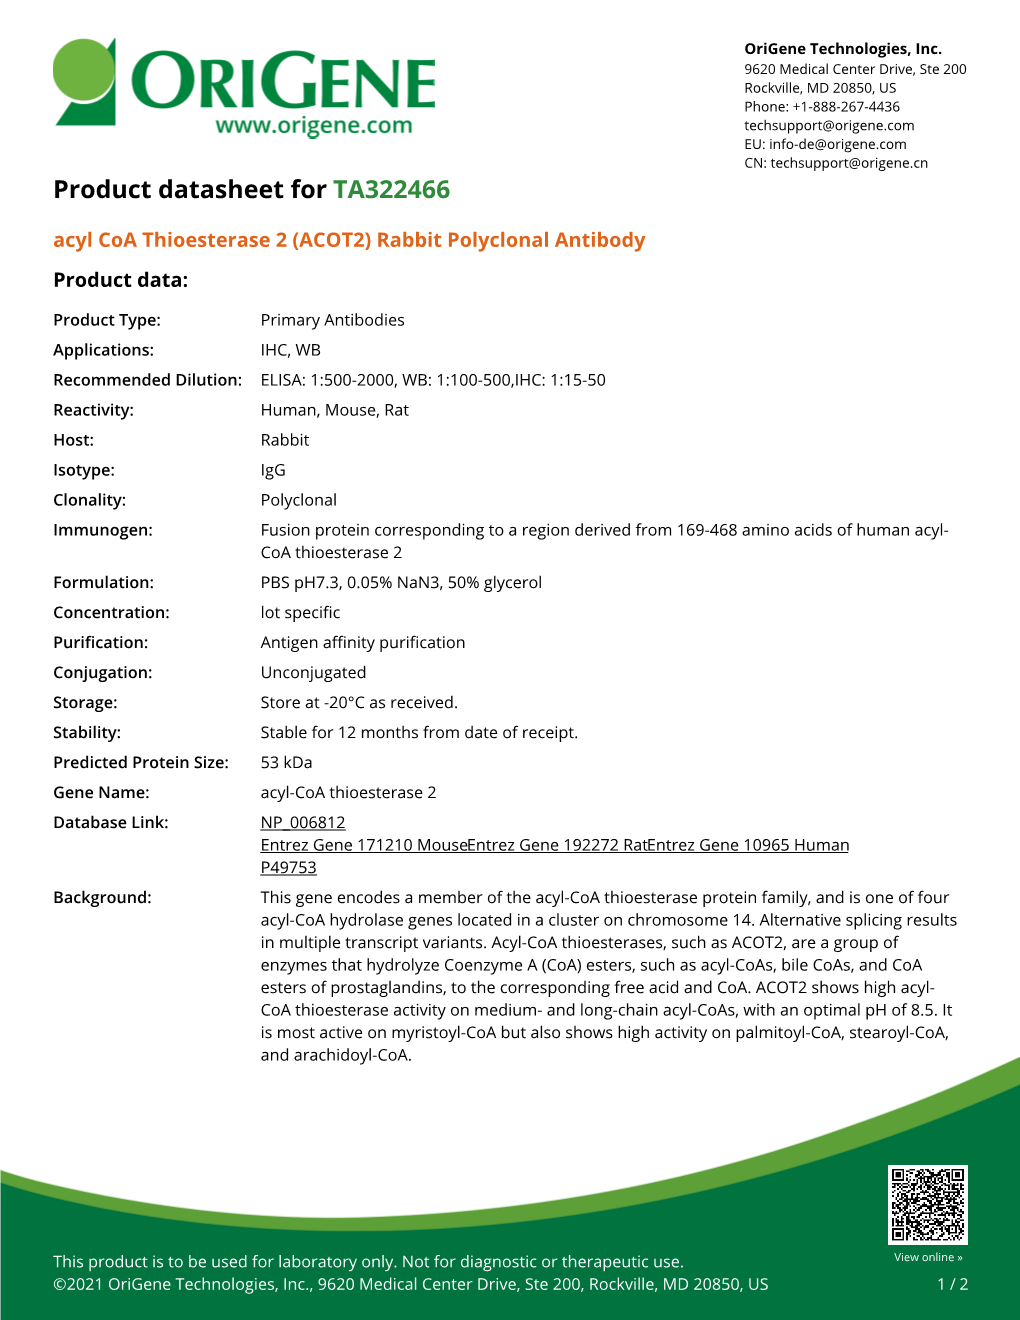 Acyl Coa Thioesterase 2 (ACOT2) Rabbit Polyclonal Antibody Product Data